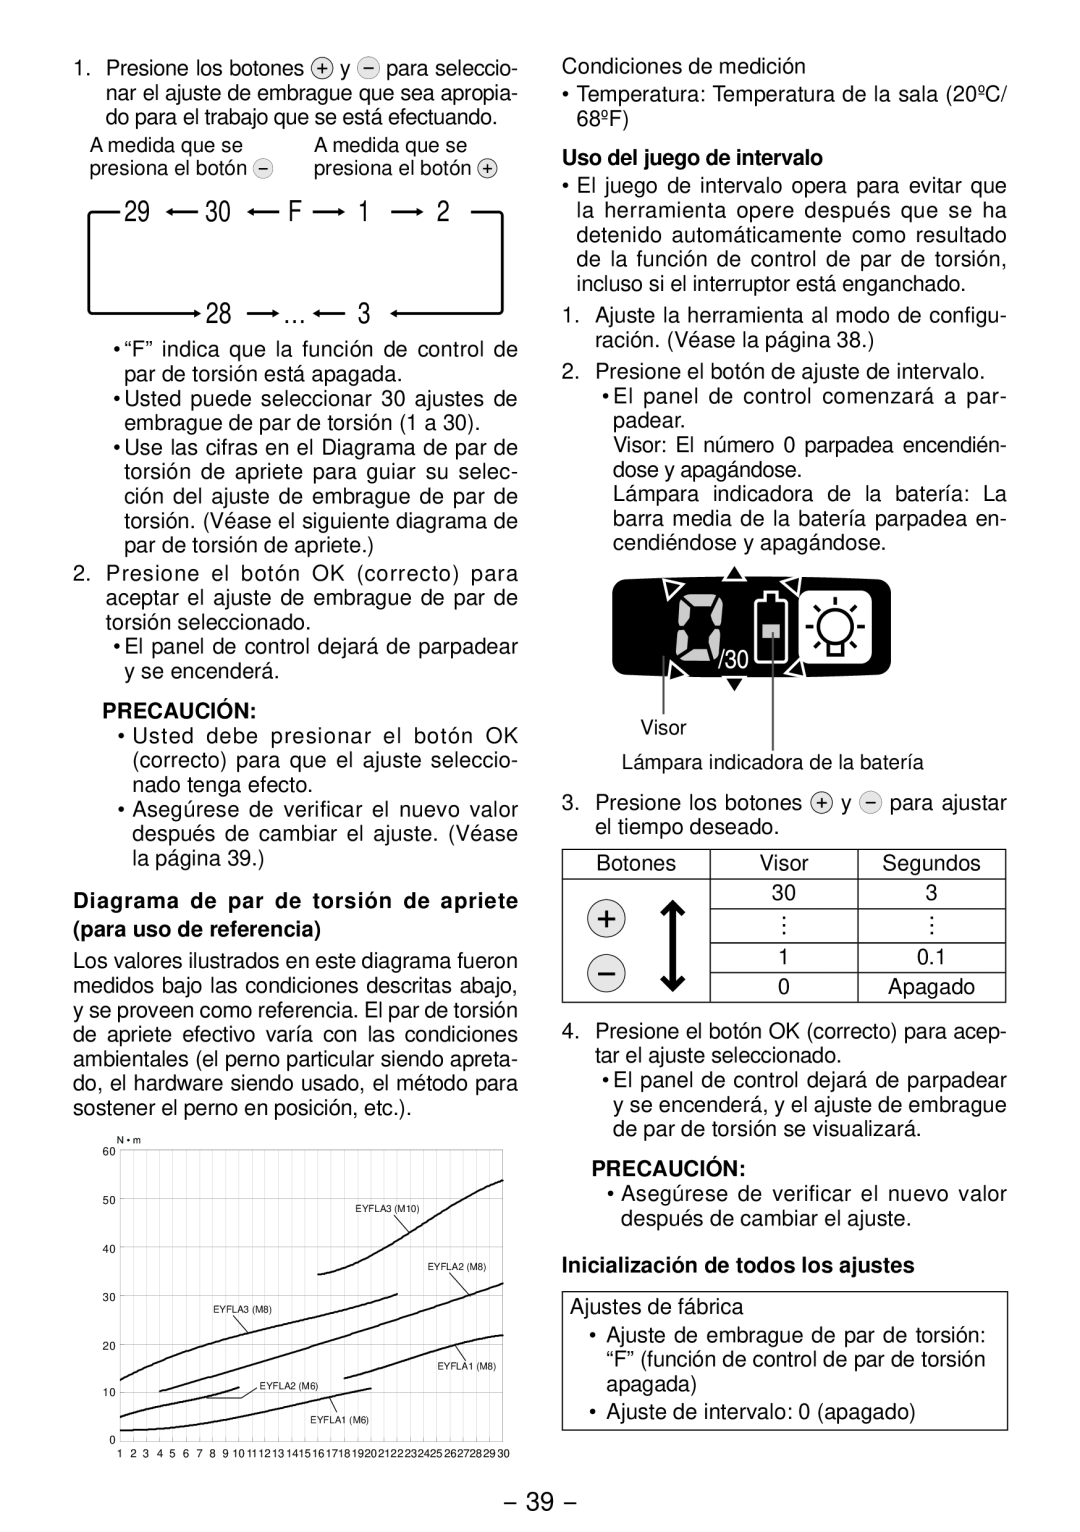 Panasonic EYFLA2A, EYFLA2Q 29 30 F 1 28 …, Precaución, Diagrama de par de torsión de apriete para uso de referencia 